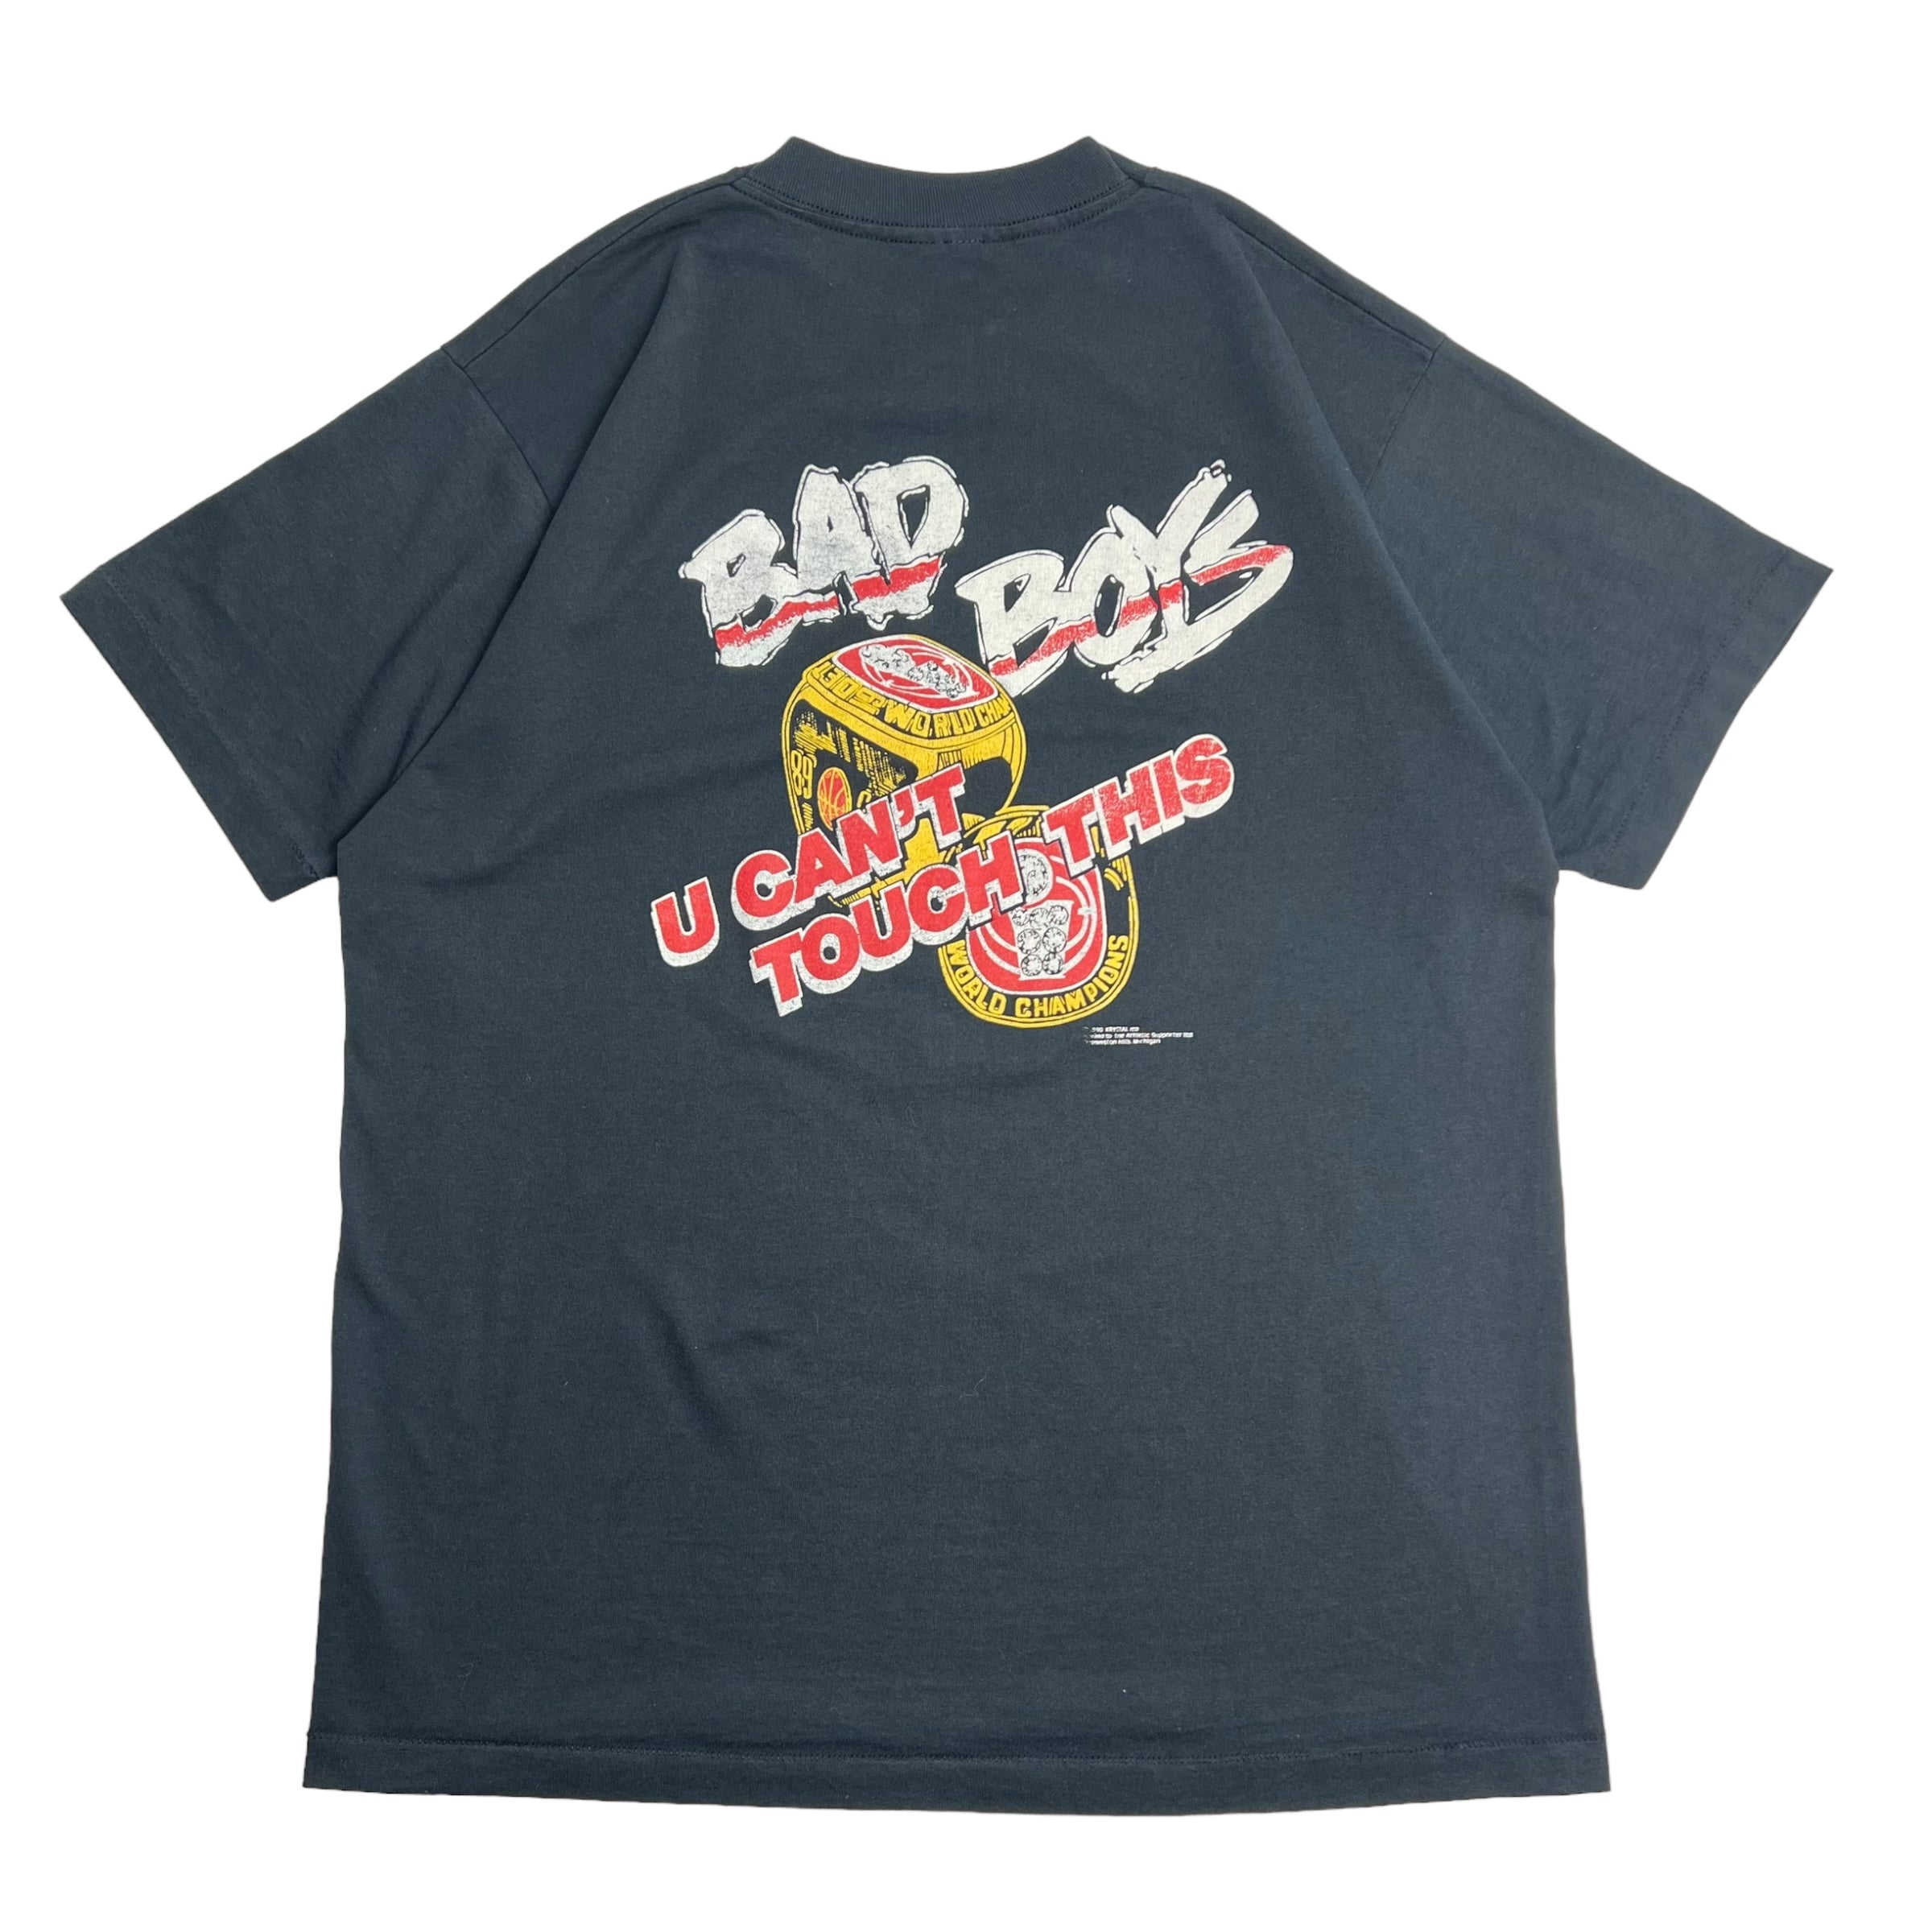 1990 Detroit Pistons “U Can’t Touch This” Shirt - Black Shirt